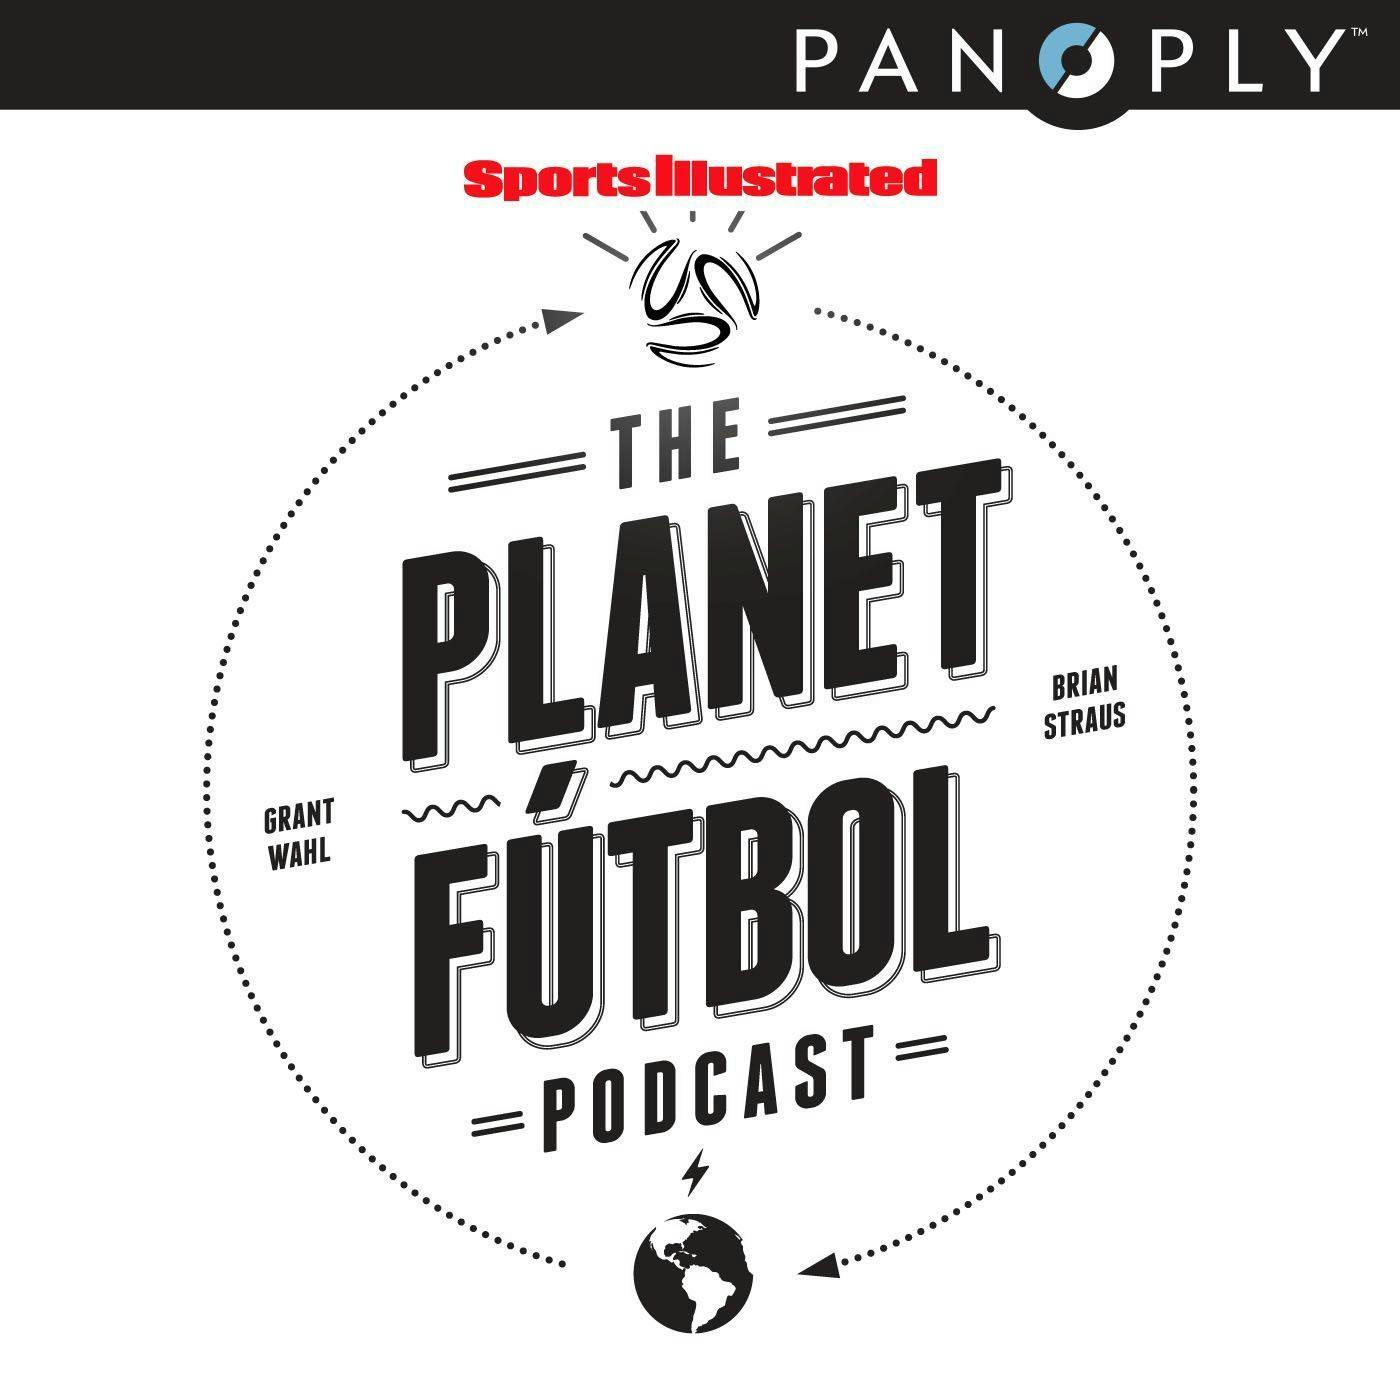 A dark week for U.S. soccer; How will Jurgen Klopp fare at Liverpool?